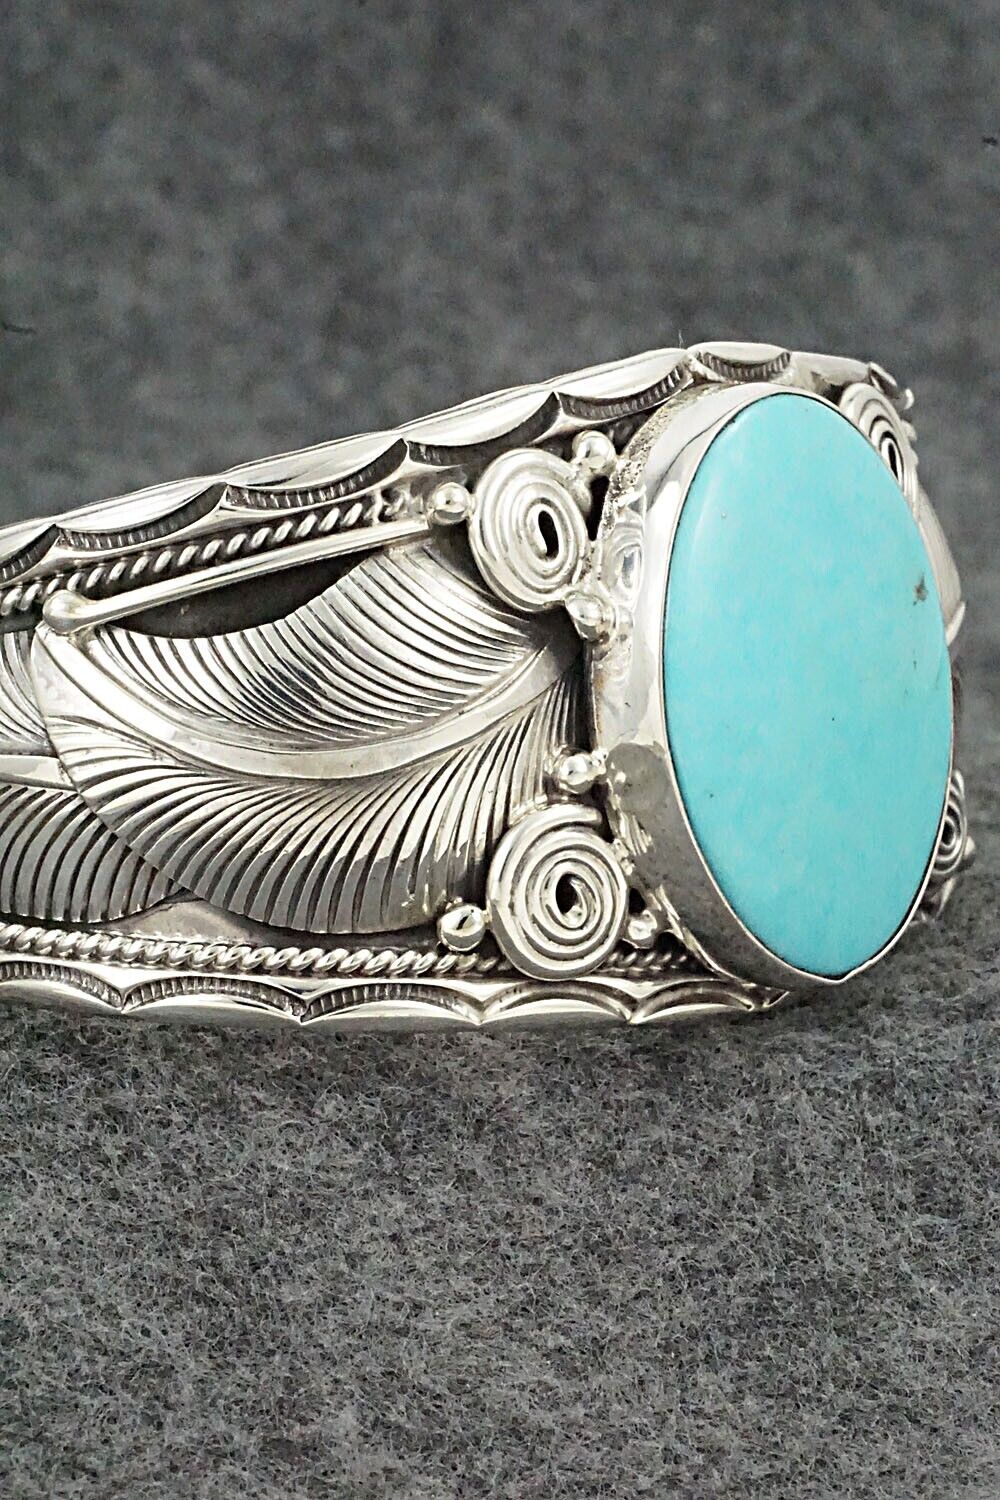 Turquoise & Sterling Silver Bracelet - Darrell Morgan